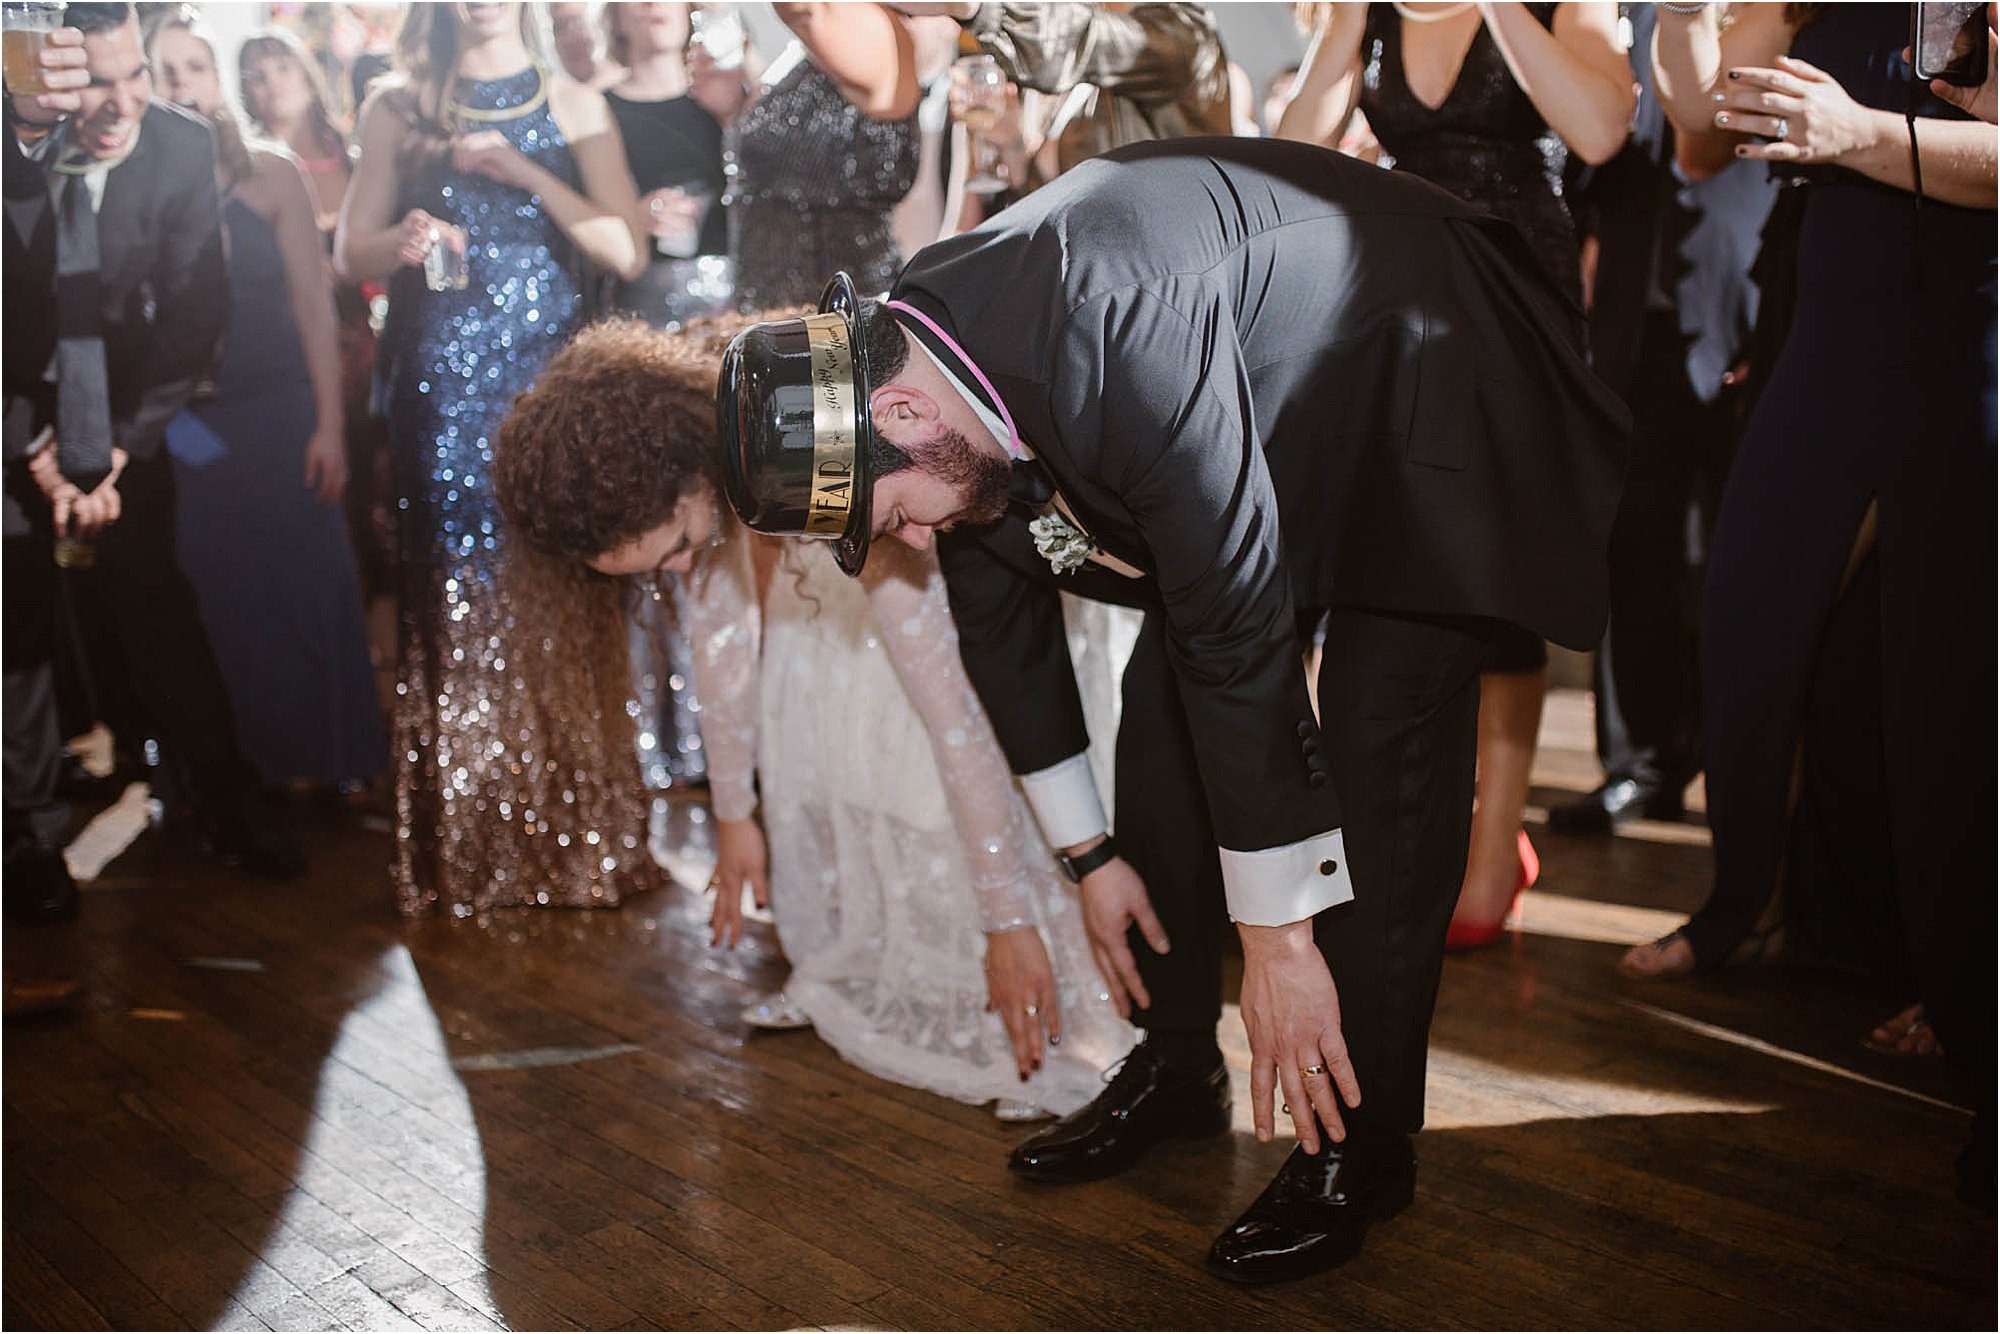 dancing photos at reception at New Year's Eve Wedding